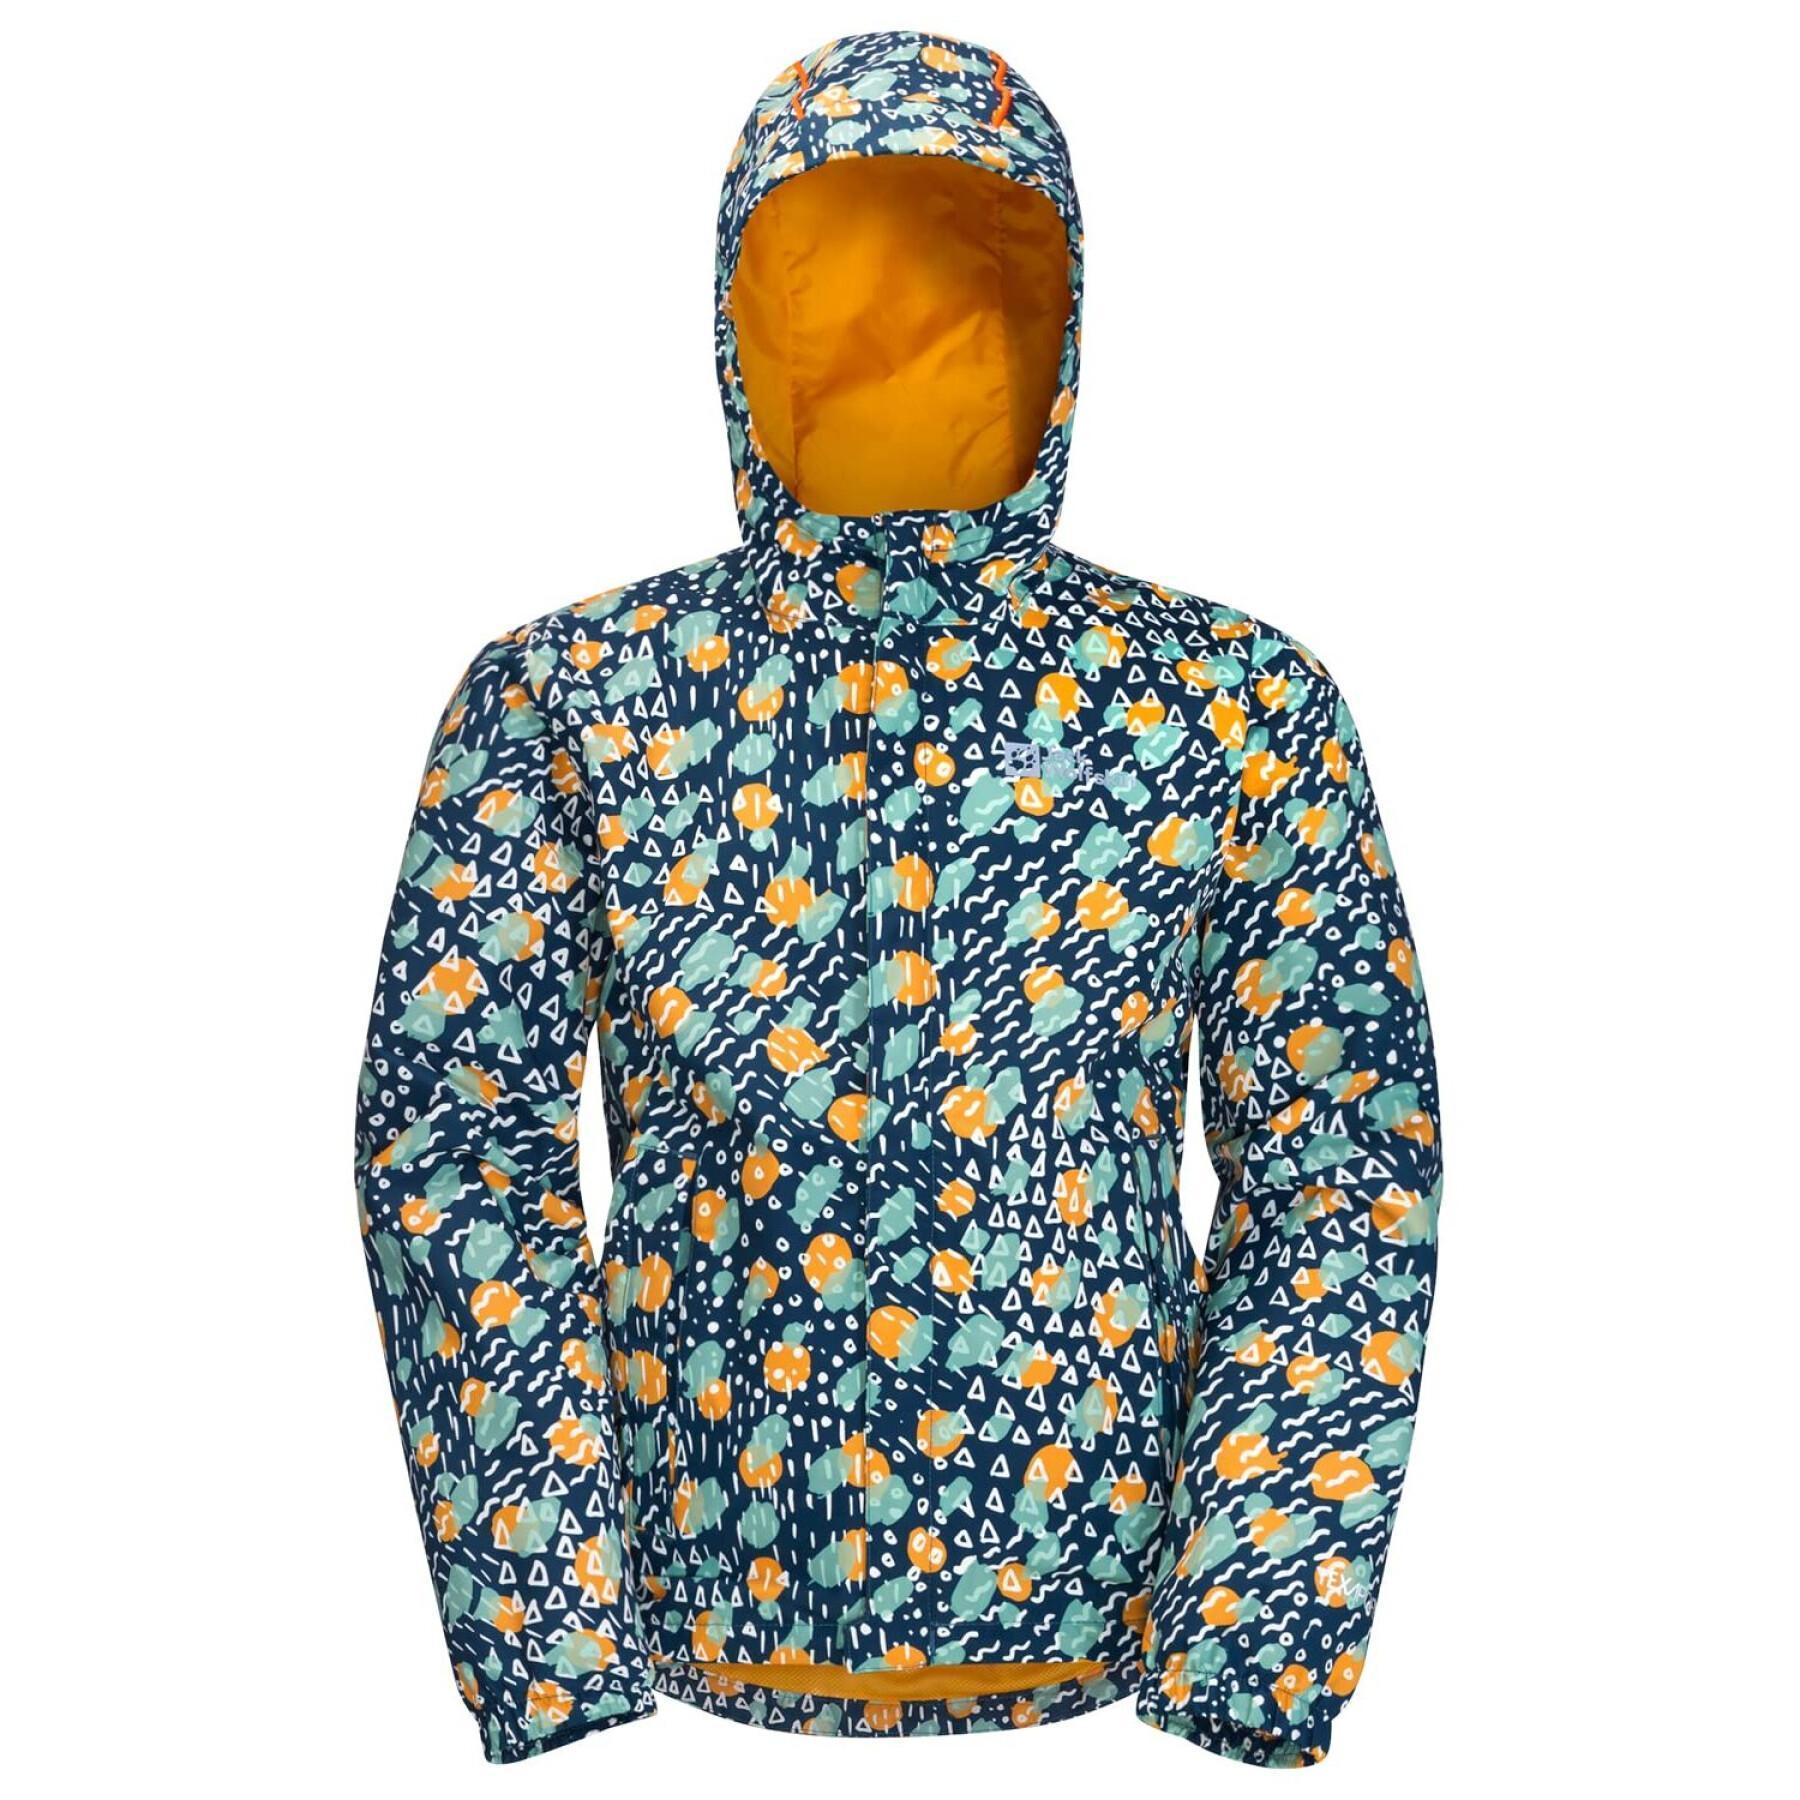 Printed waterproof jacket for children Jack Wolfskin Villi 2l